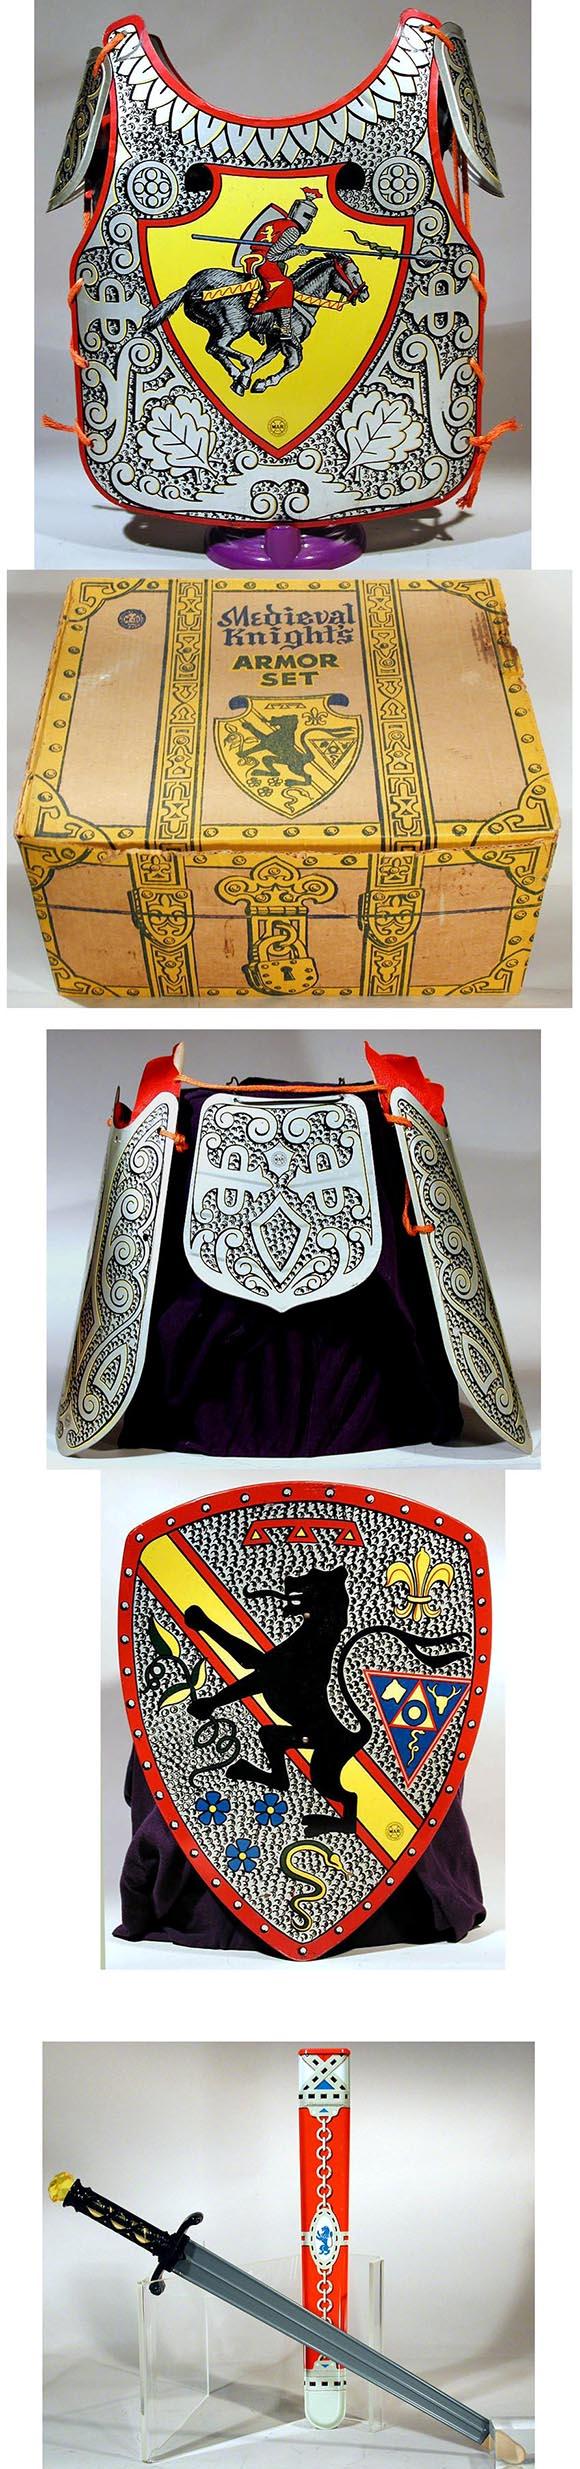 c.1955 Marx, Medieval Knights Armor Set in Original Box